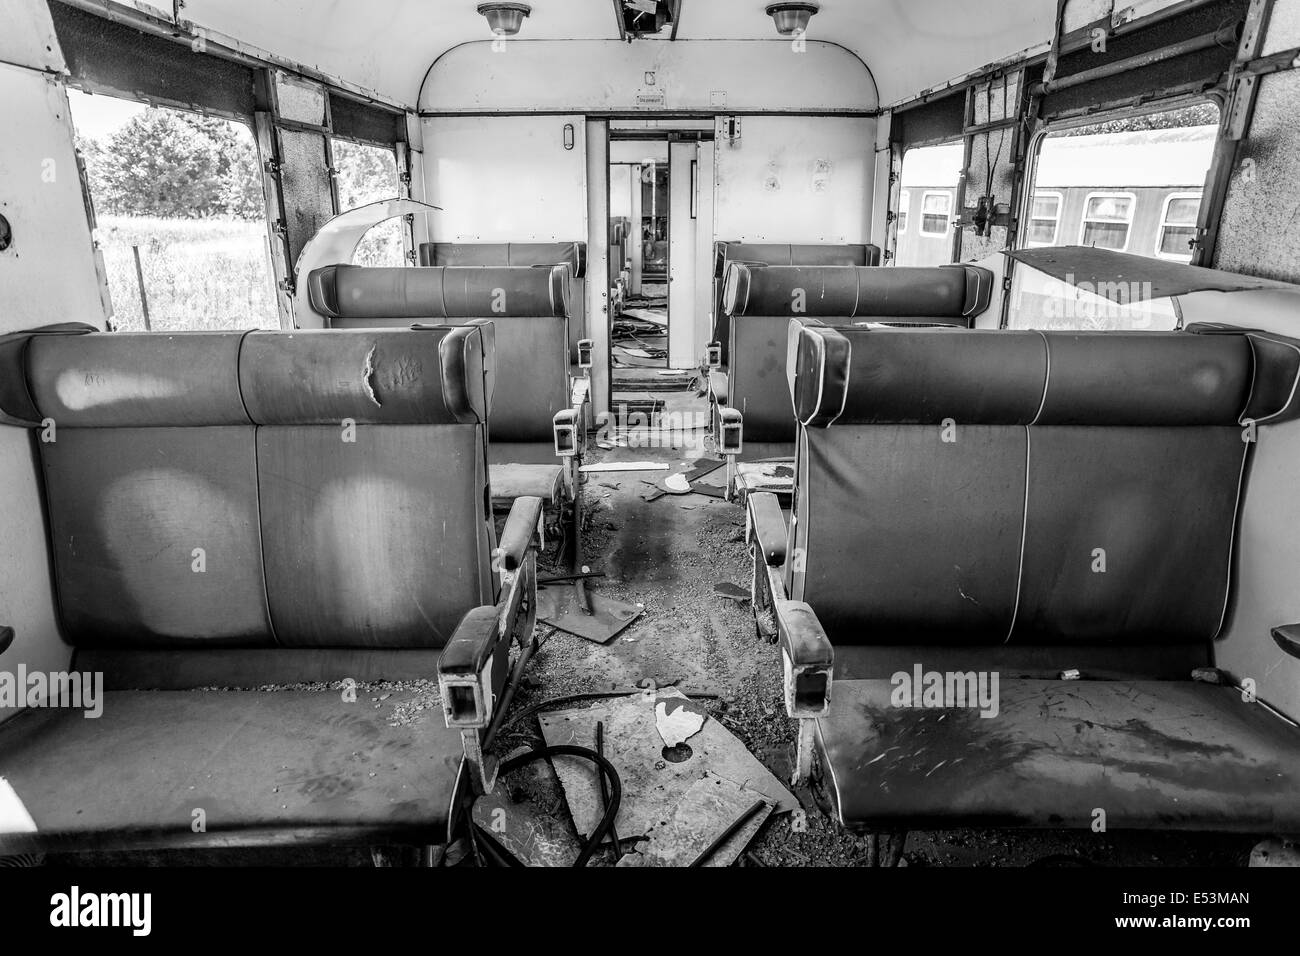 Abandoned demolished carriage Stock Photo